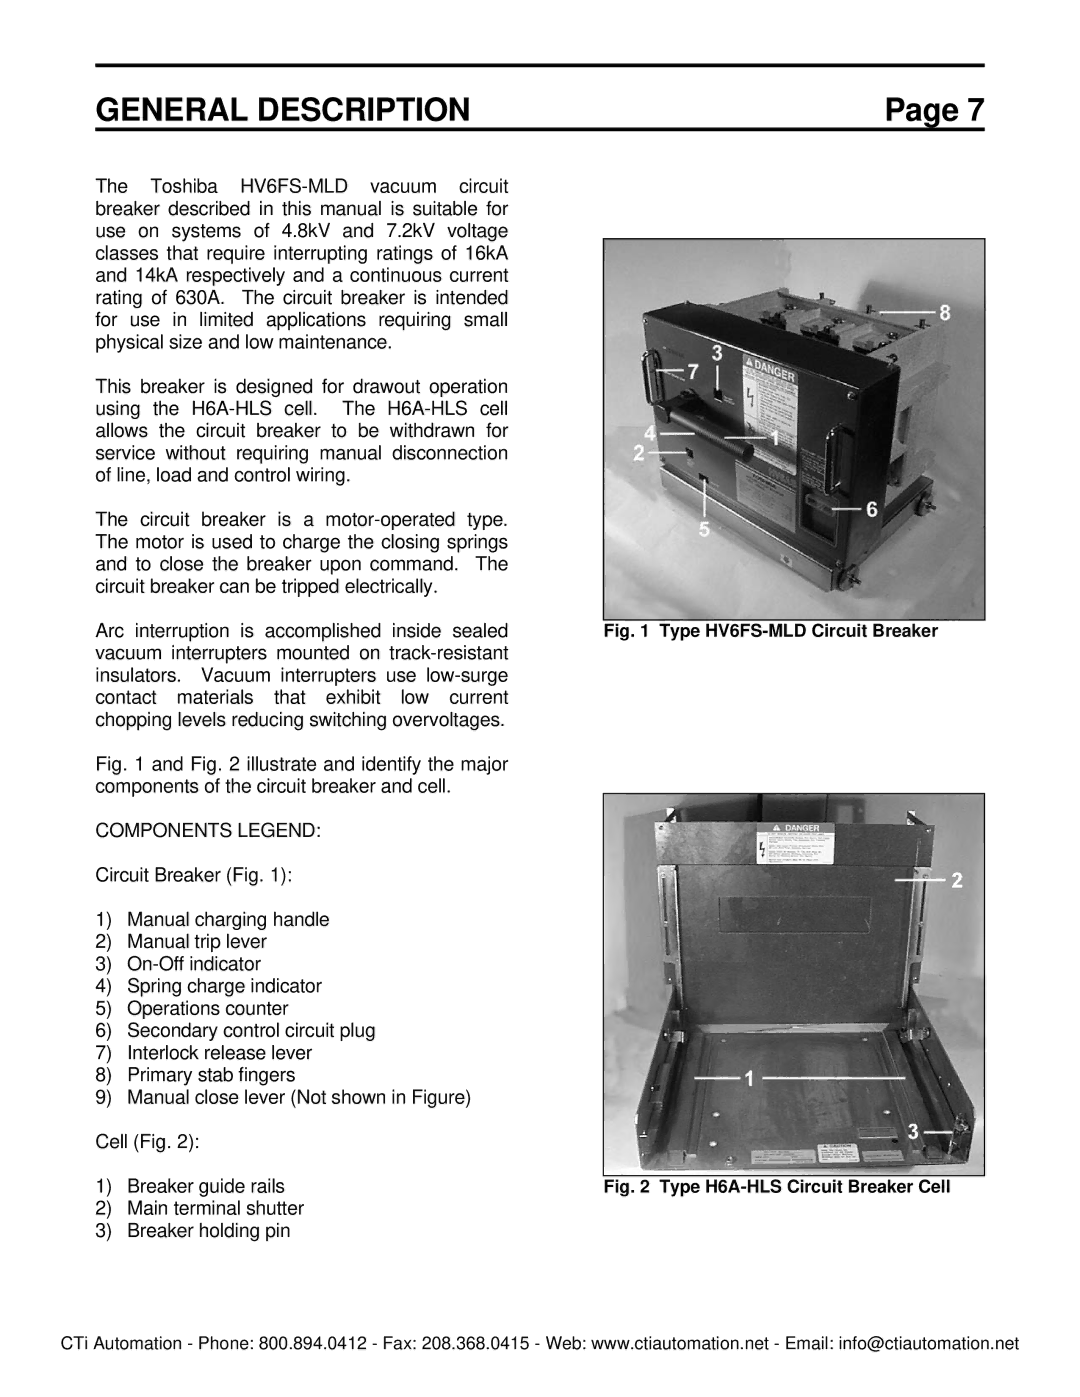 Toshiba HV6FS-MLD instruction manual General Description, Components Legend 